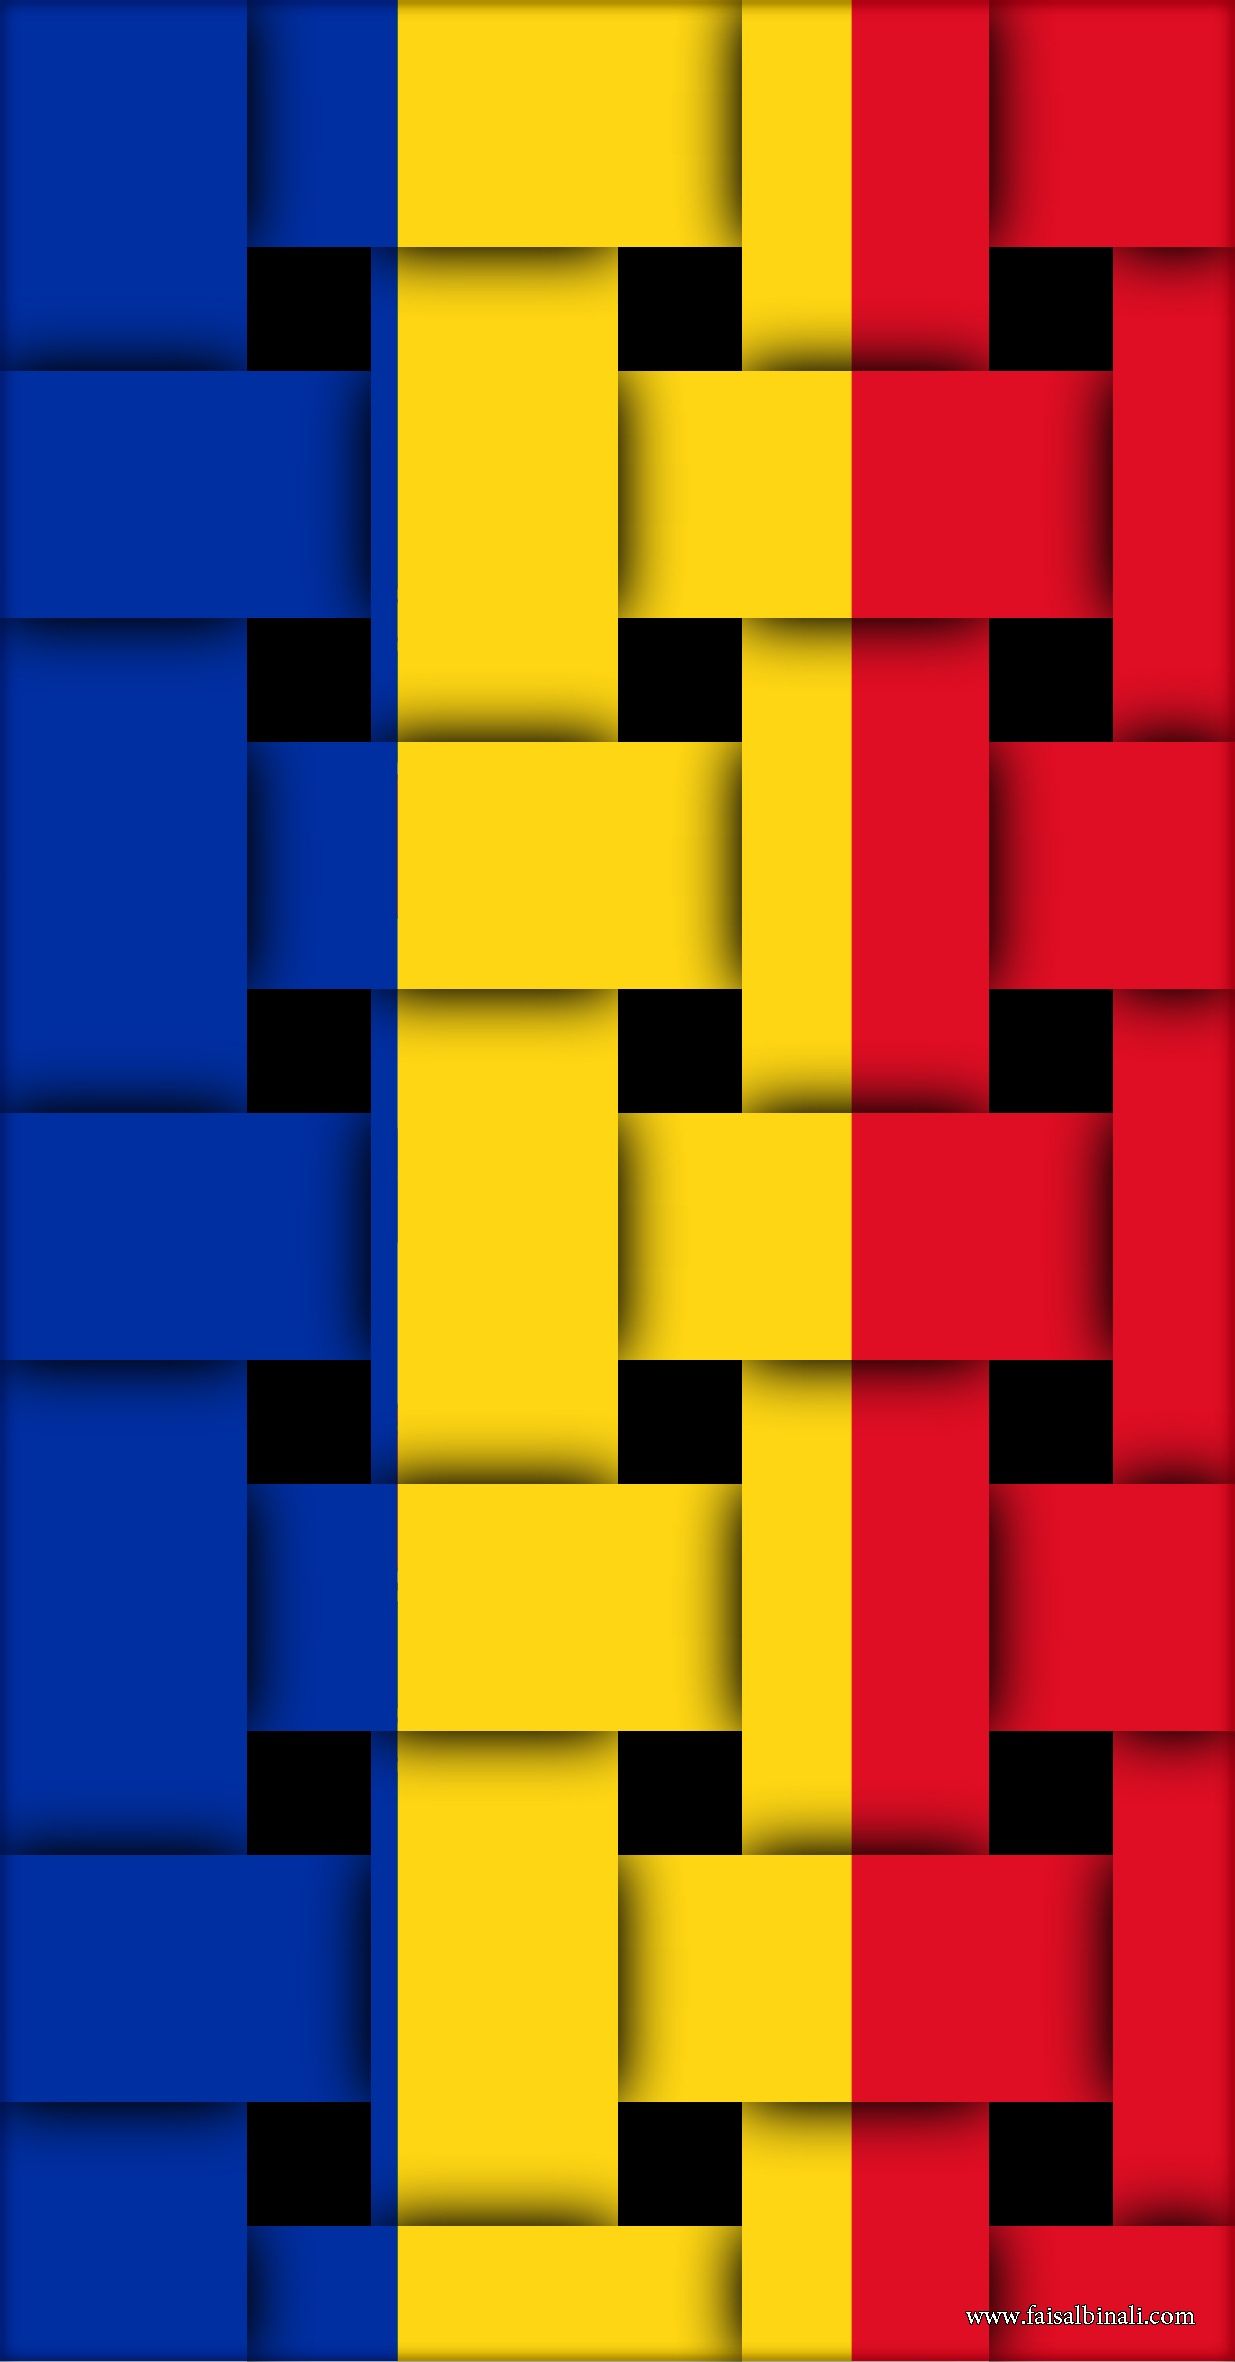 Romania Flags Artwork Wallpaper For Smartphones Tablets